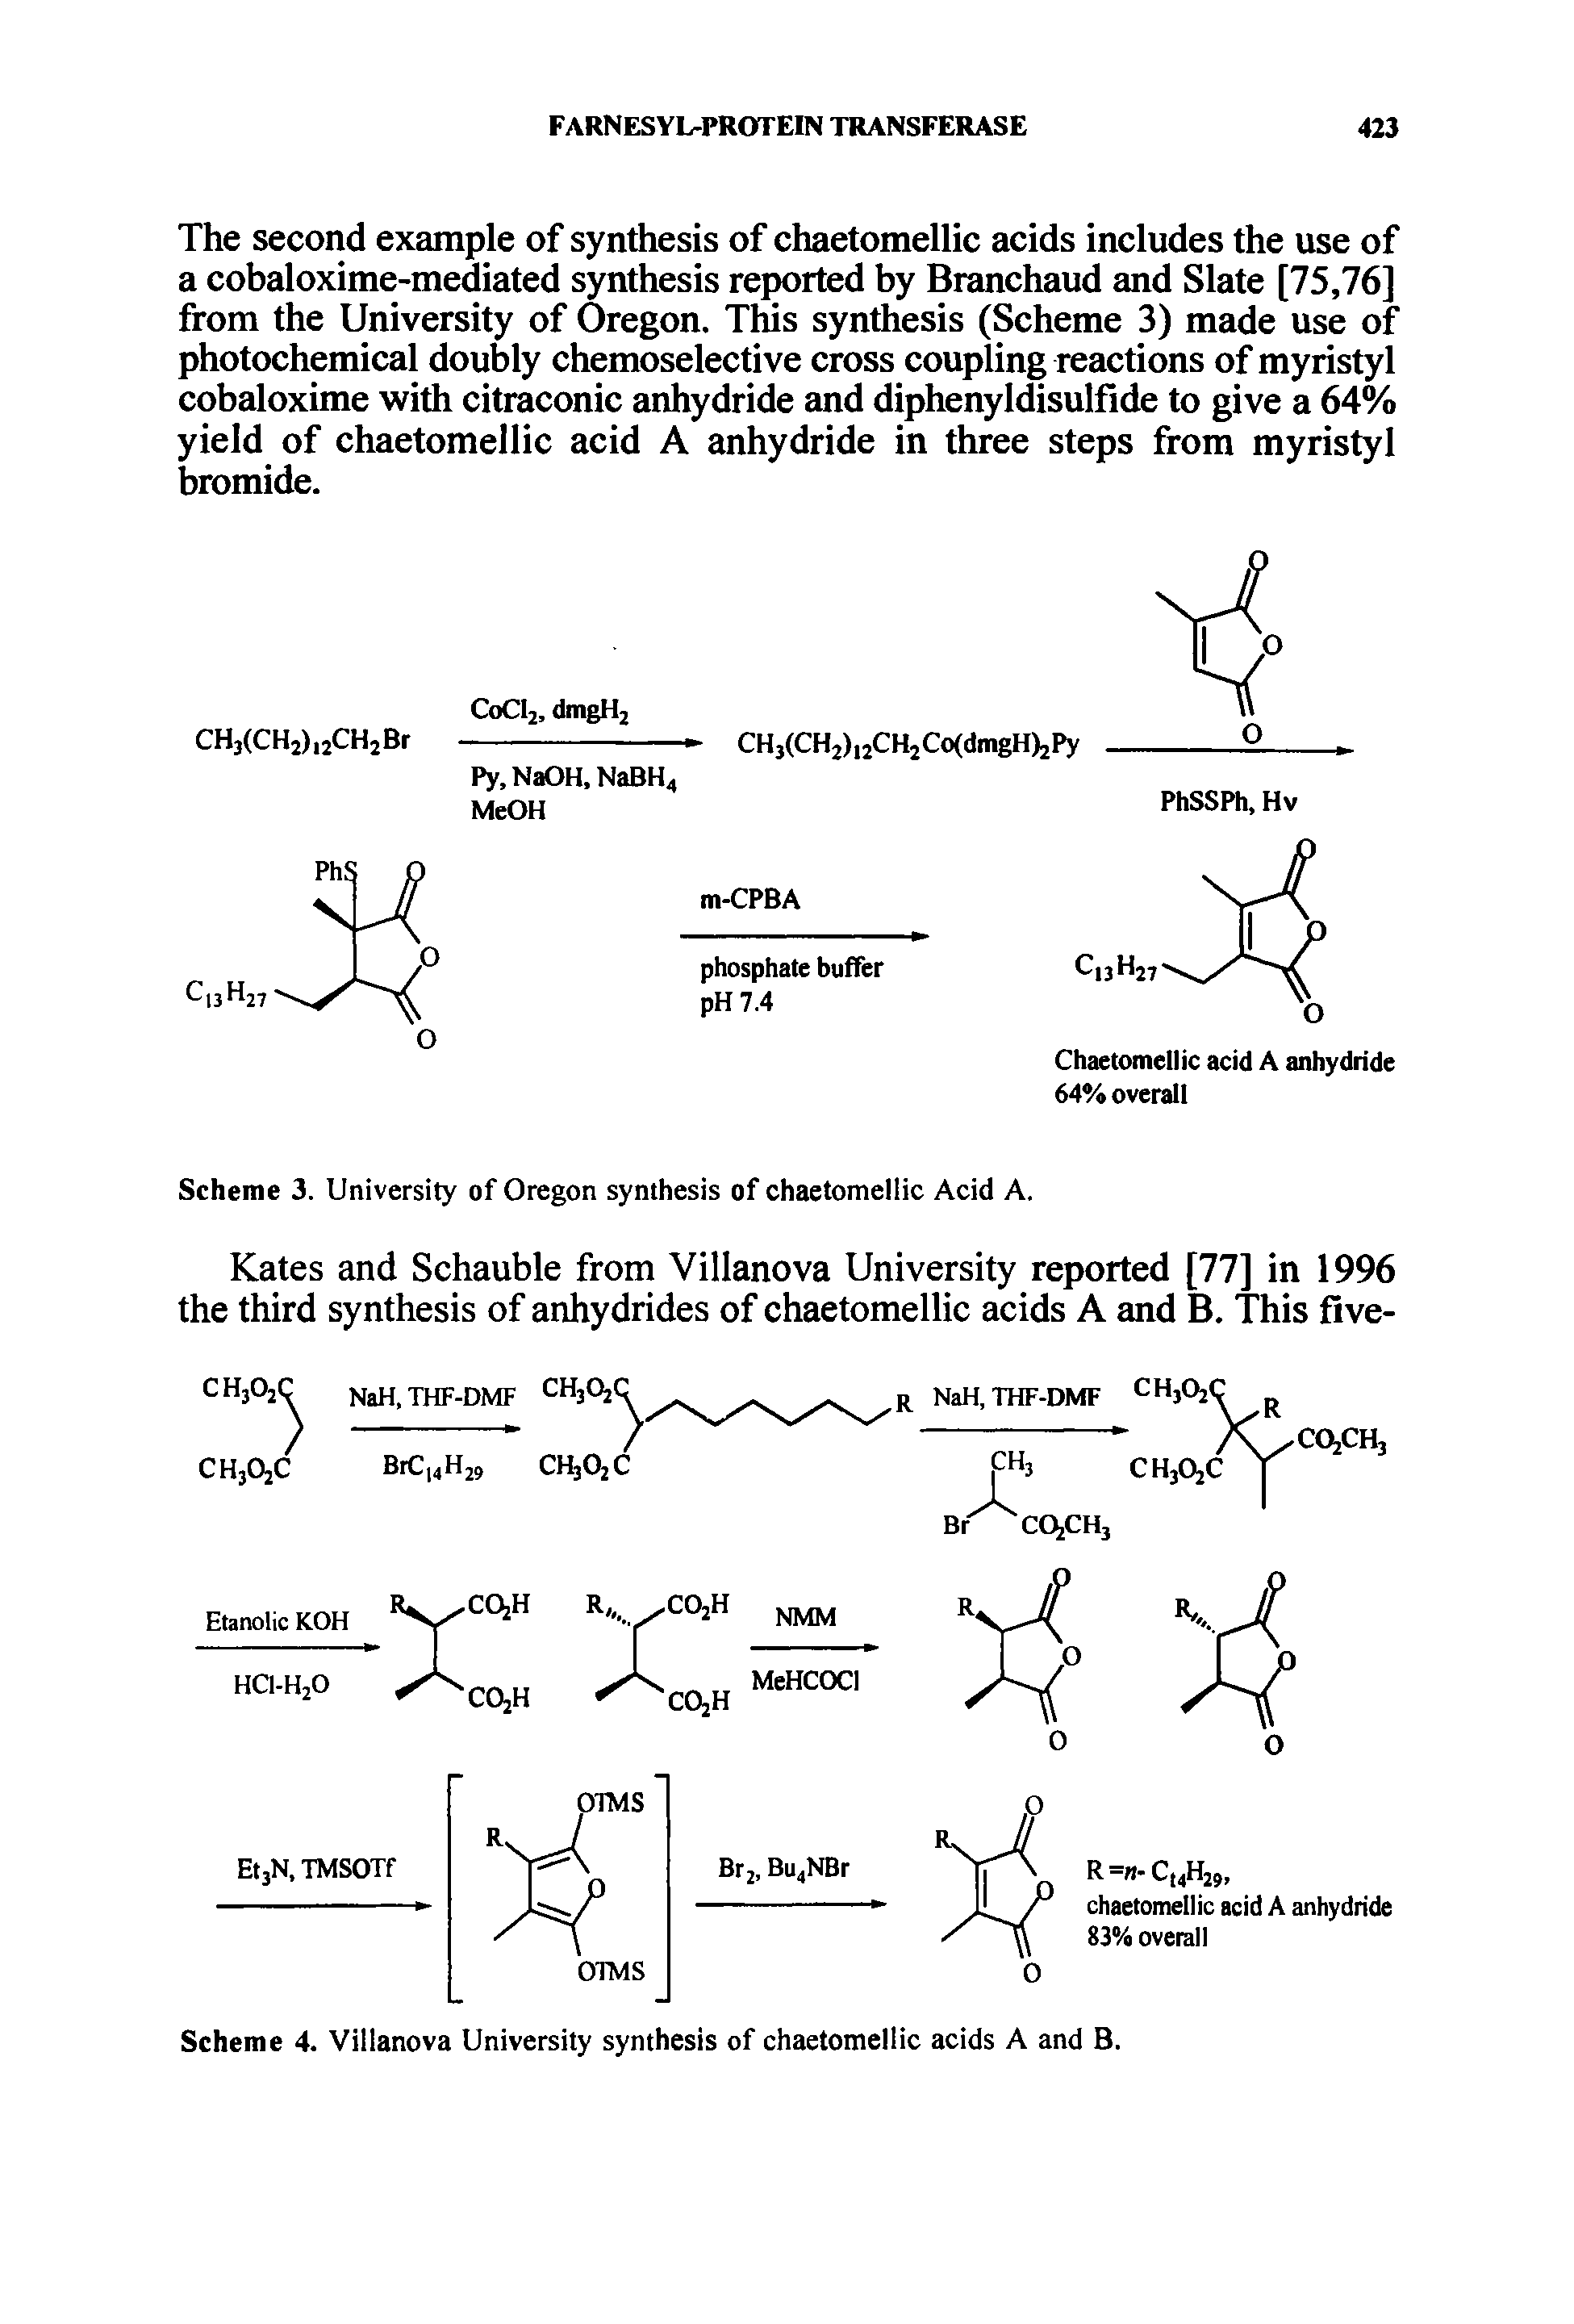 Scheme 3. University of Oregon synthesis of chaetomellic Acid A.